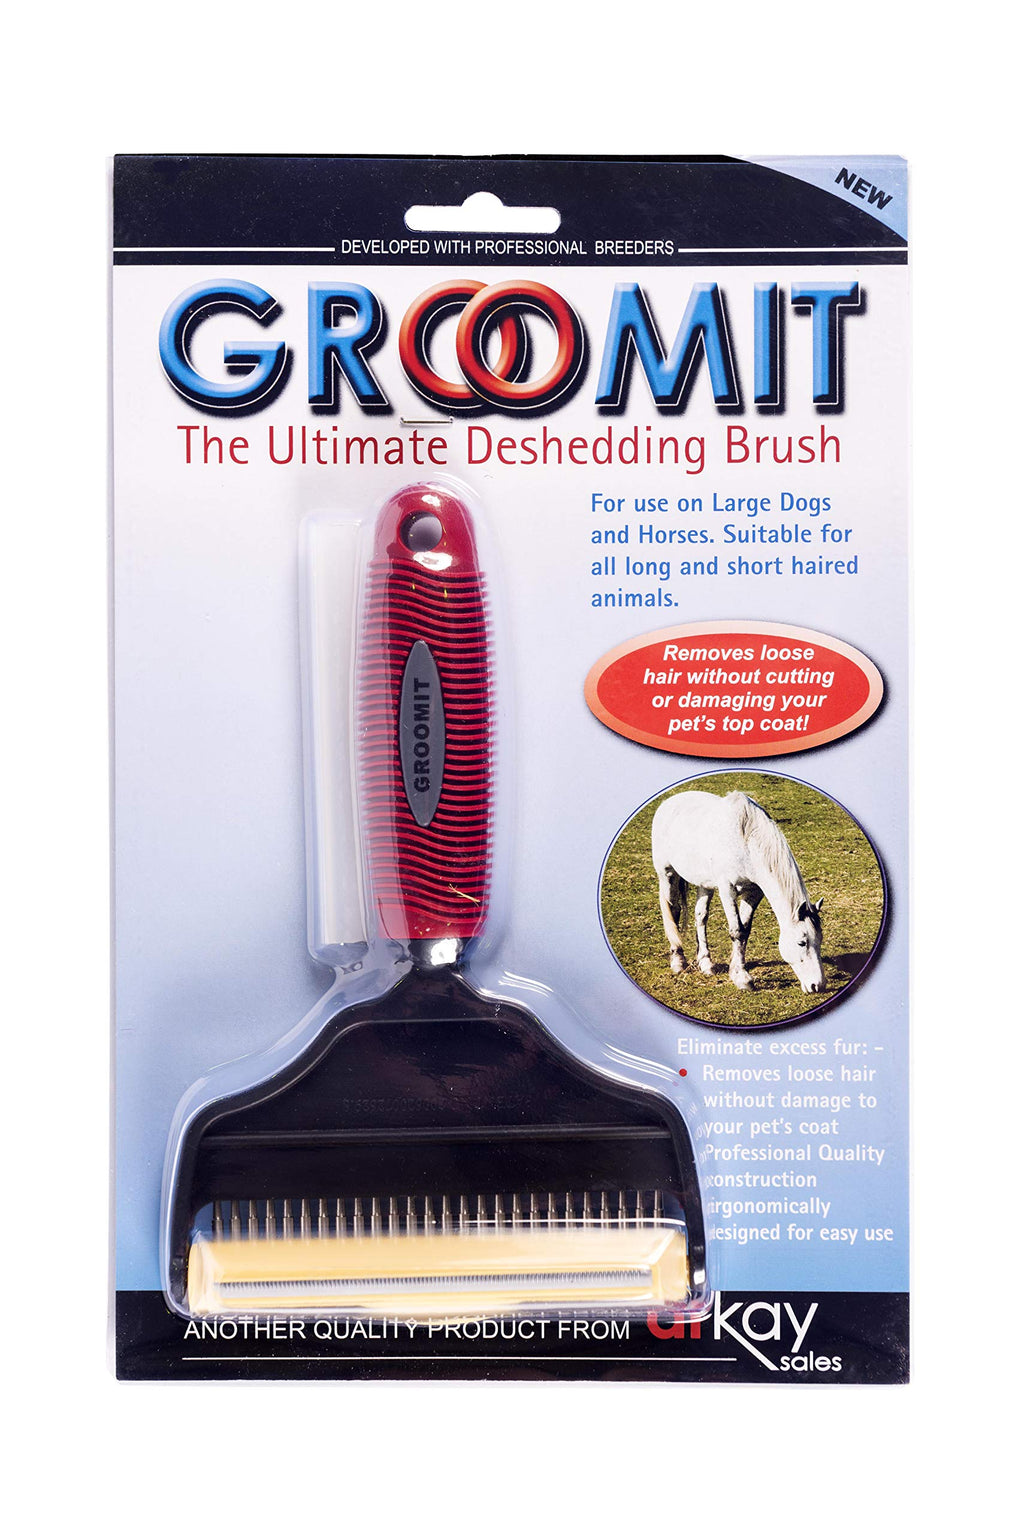 groomit the ultimate deshedding tool  for dogs, cats and horses. Reduce shedding by%90 ideal for spaniels, labs- LGE - PawsPlanet Australia